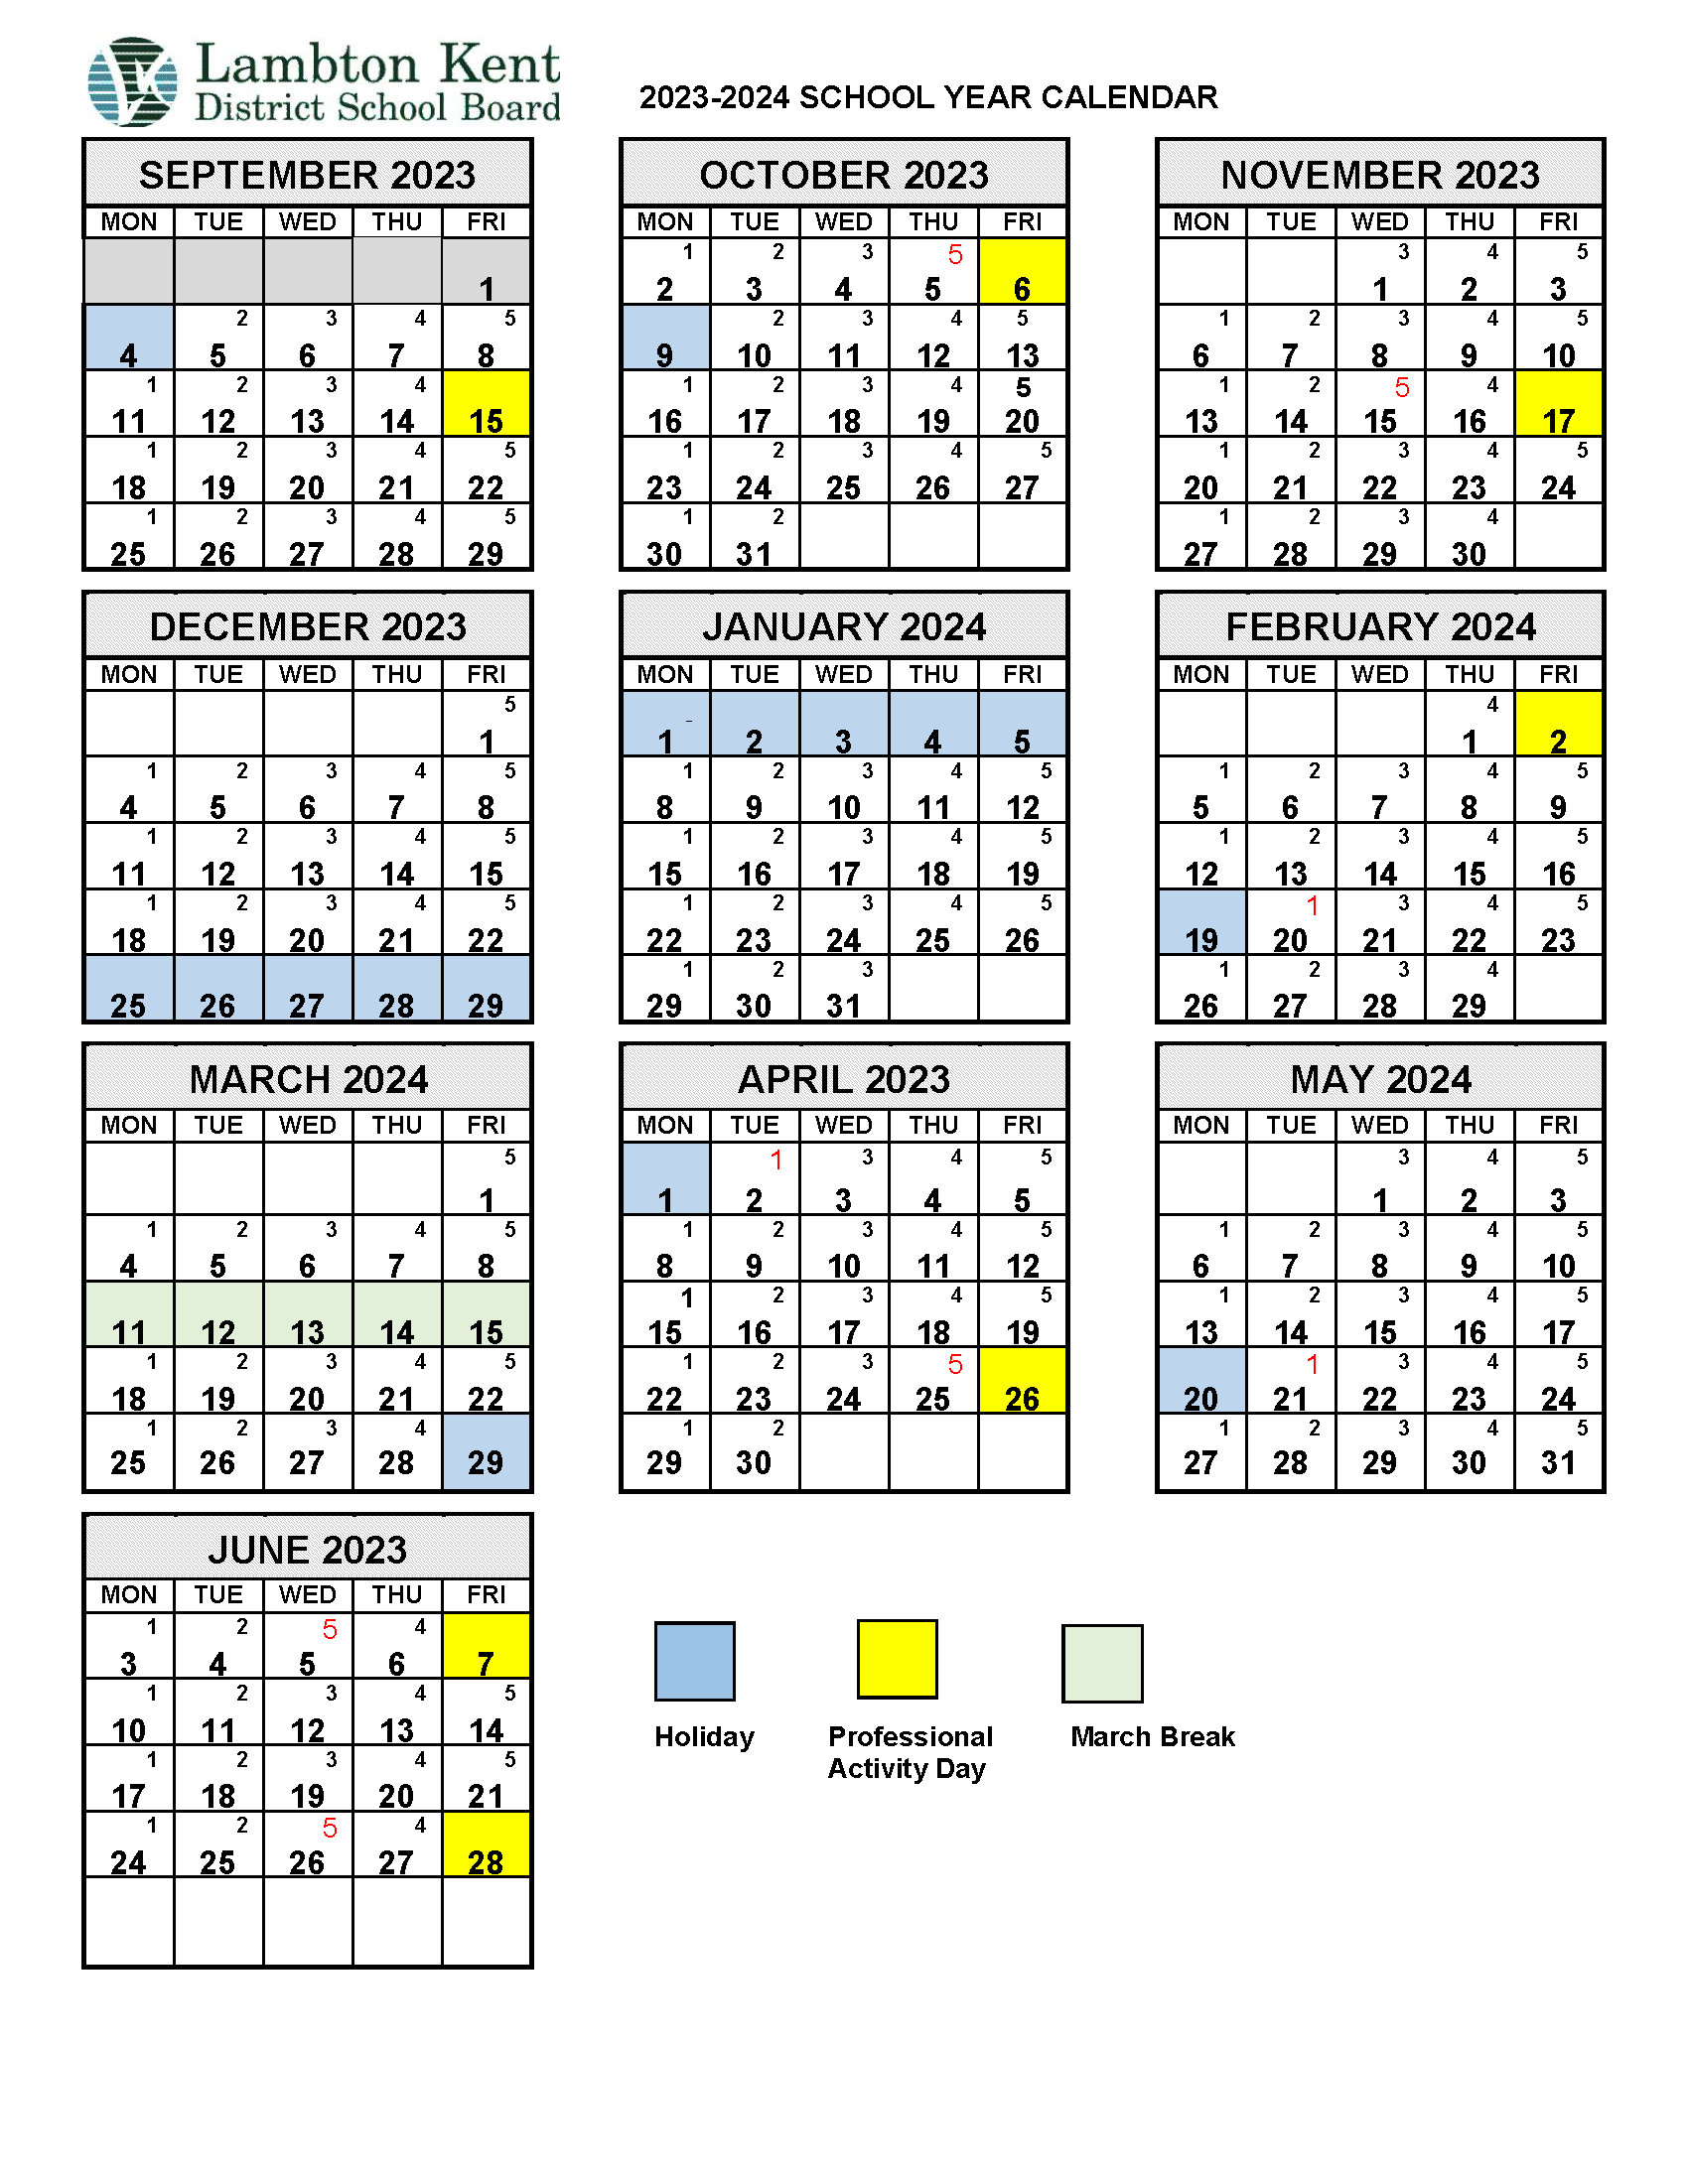 Pps 2022 23 Calendar Elementary Calendar - Lambton Kent District School Board